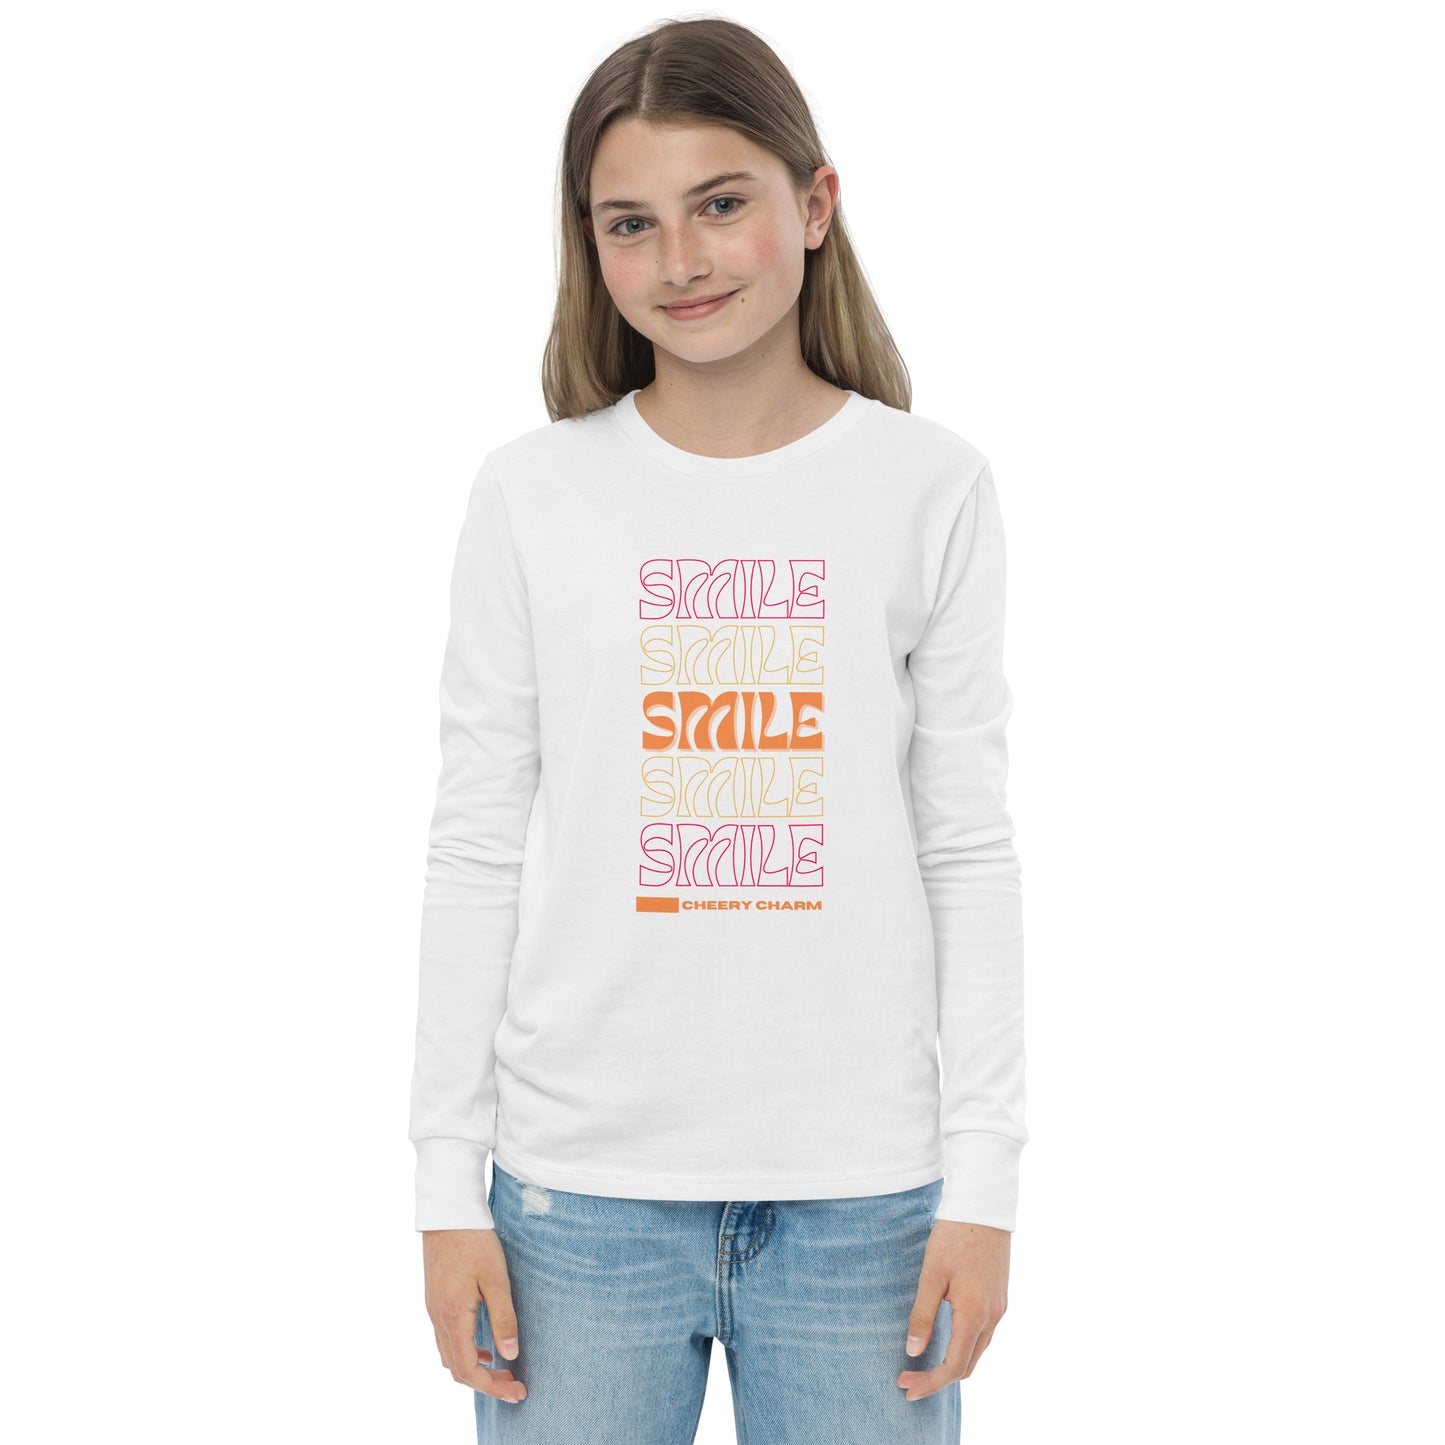 Smile, Cheery Charm - Camiseta de manga larga para jóvenes